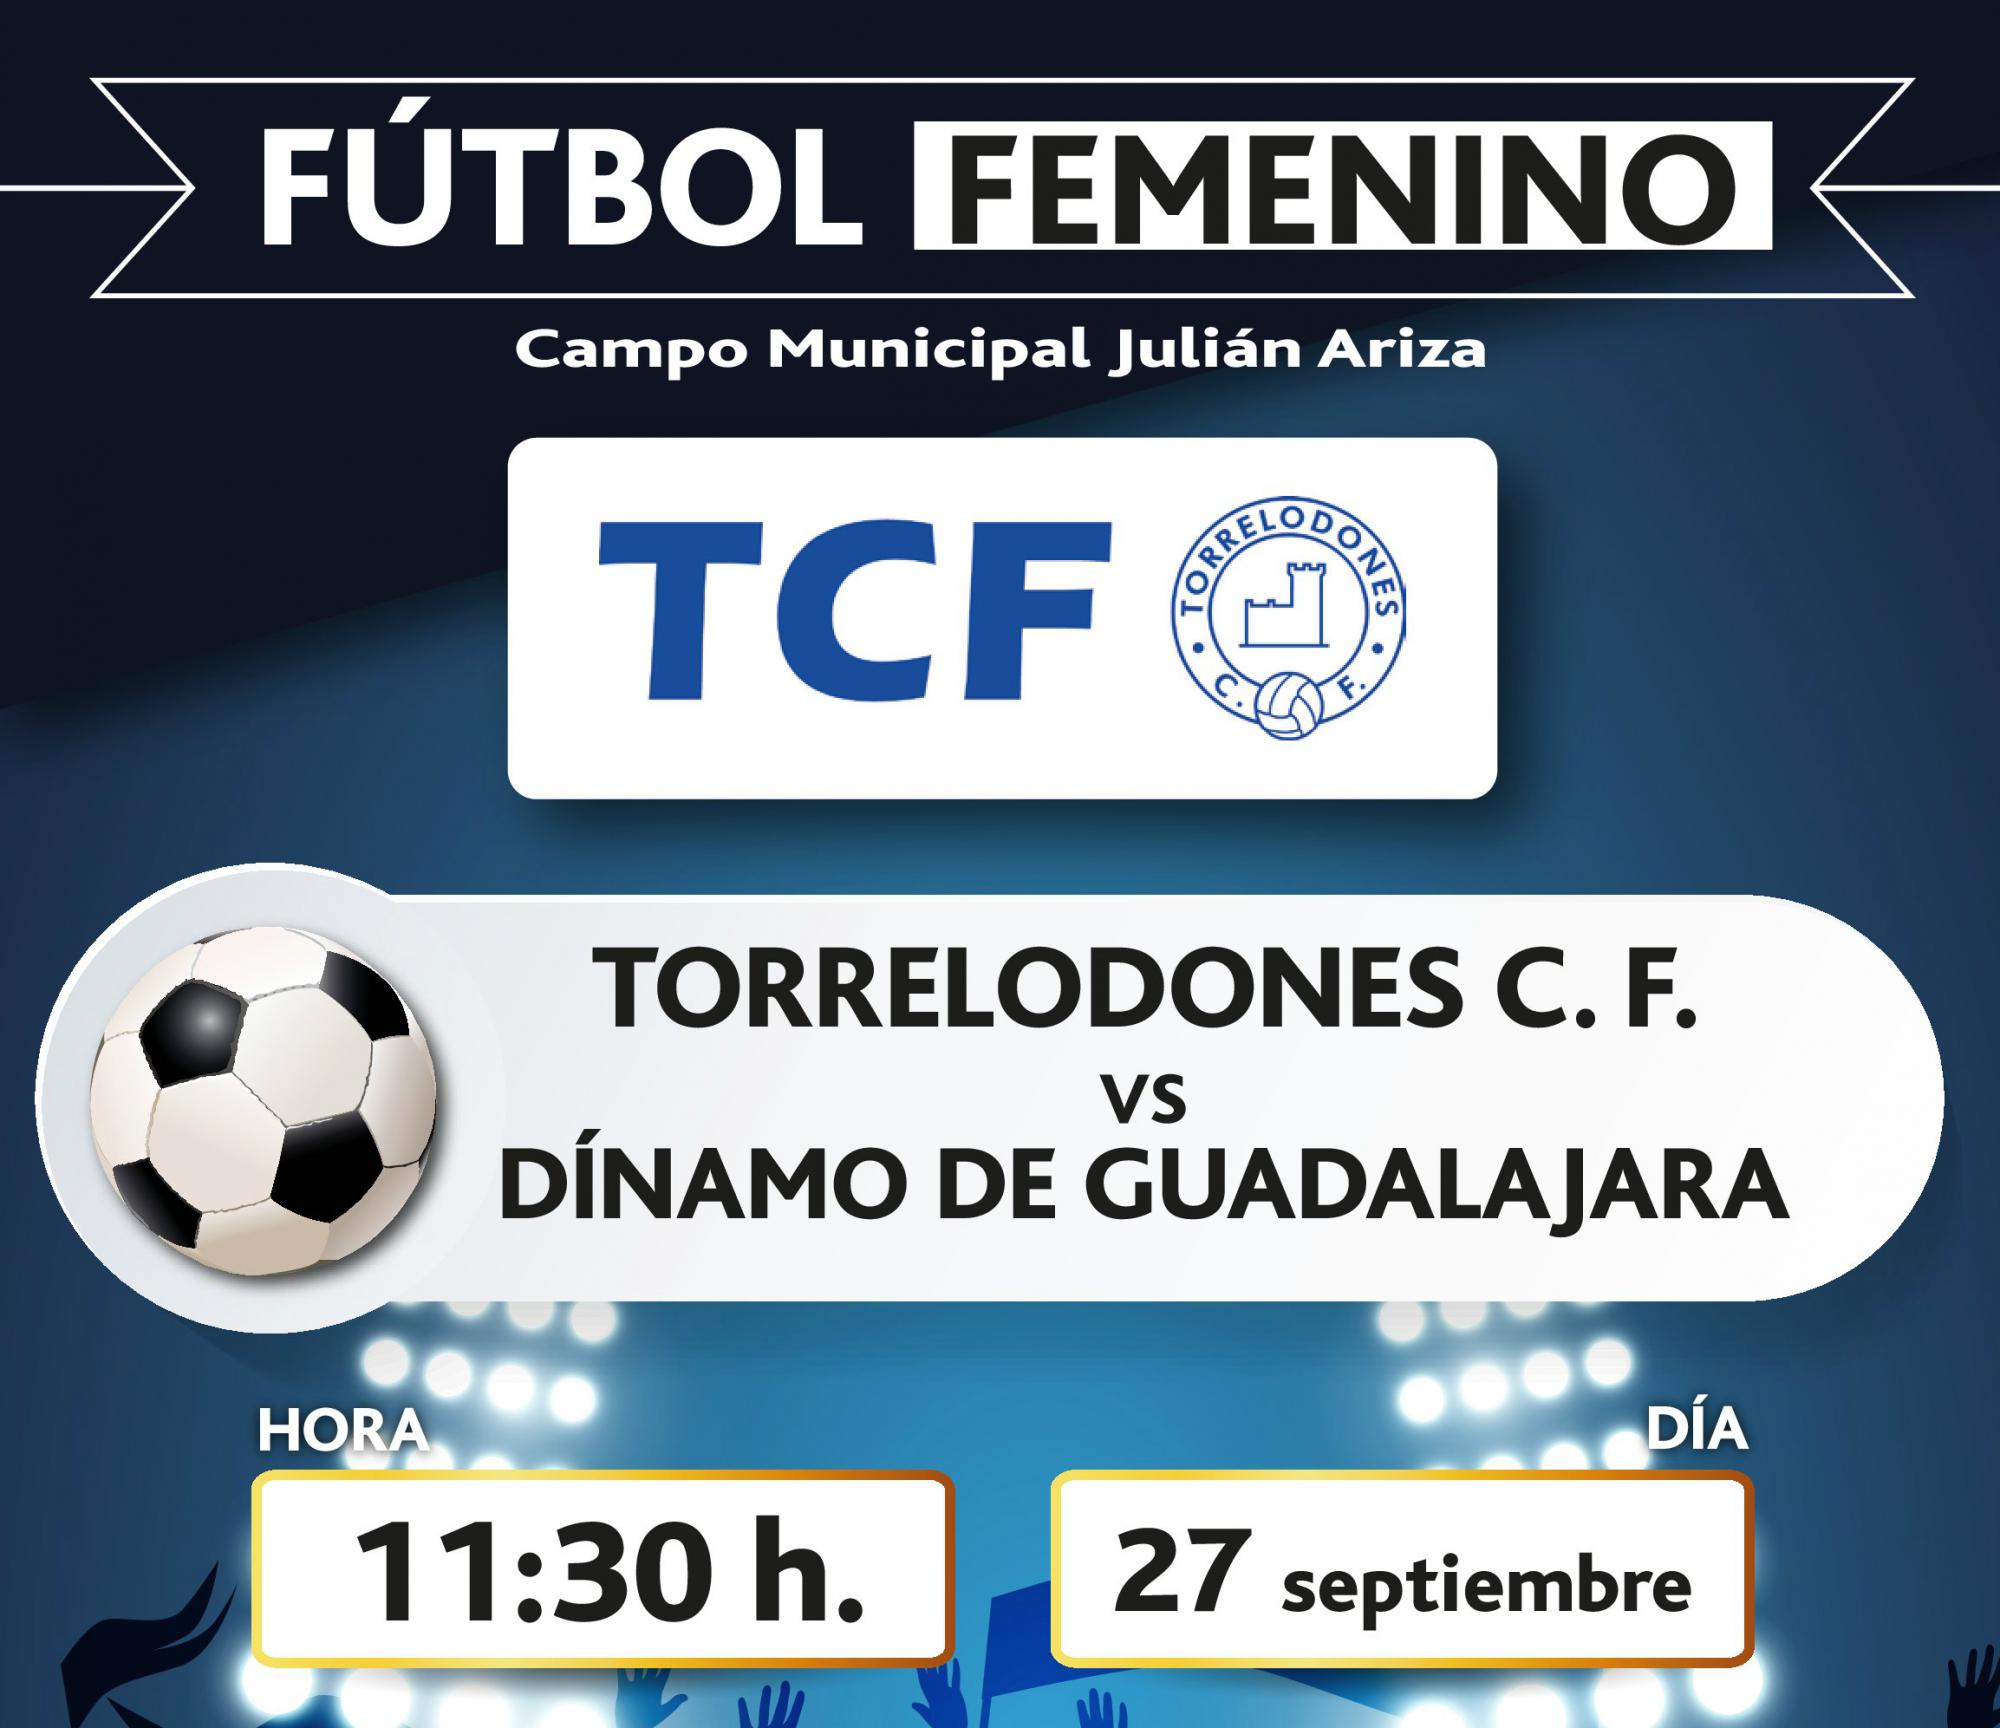 Fútbol femenino, este domingo en Torrelodones